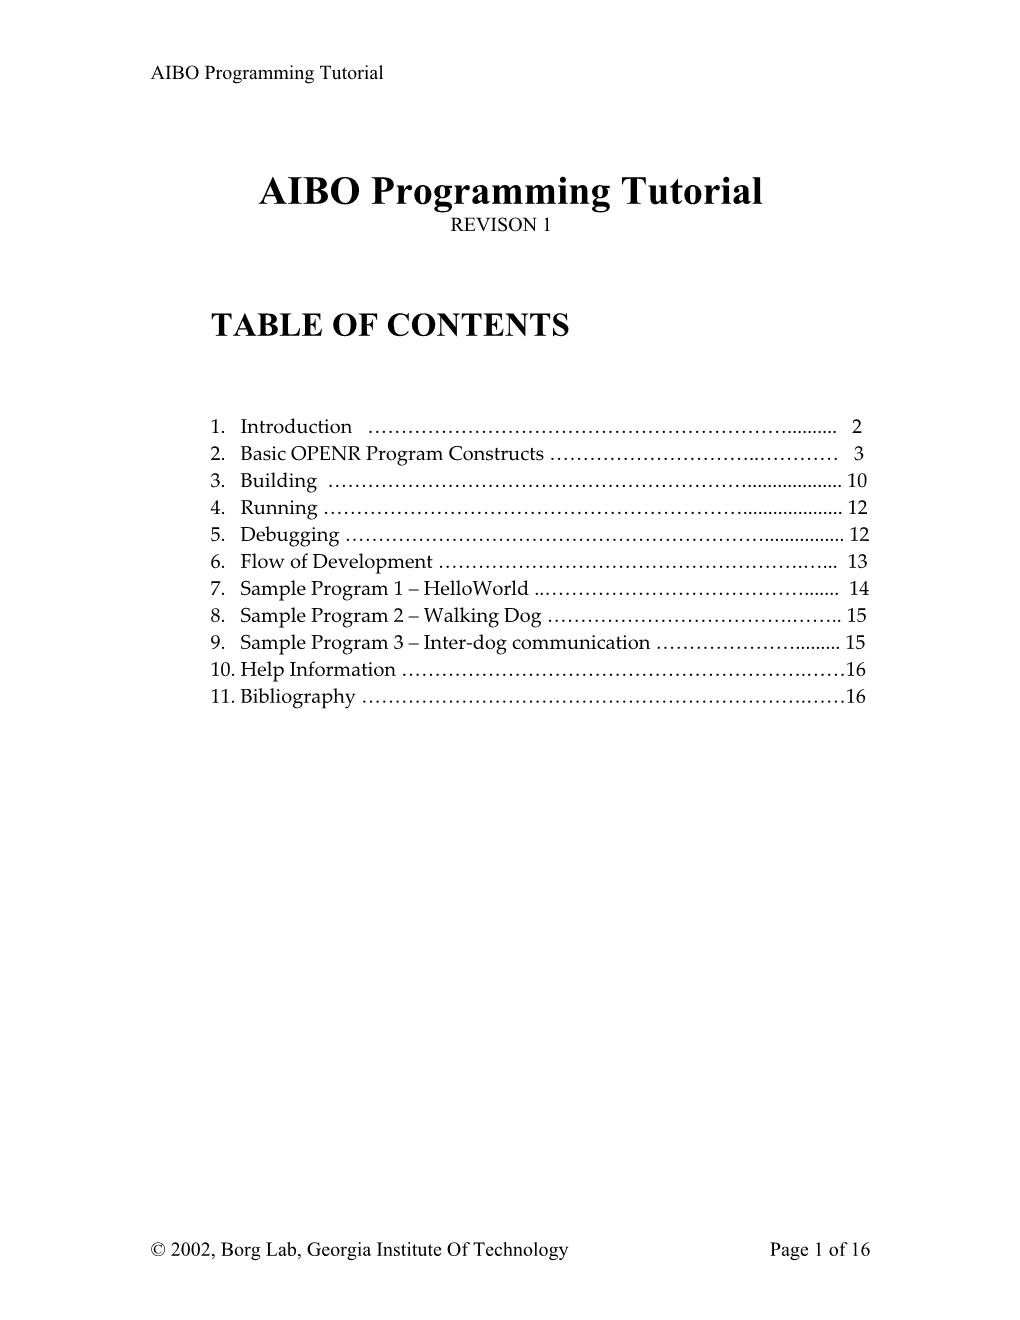 AIBO Programming Tutorial